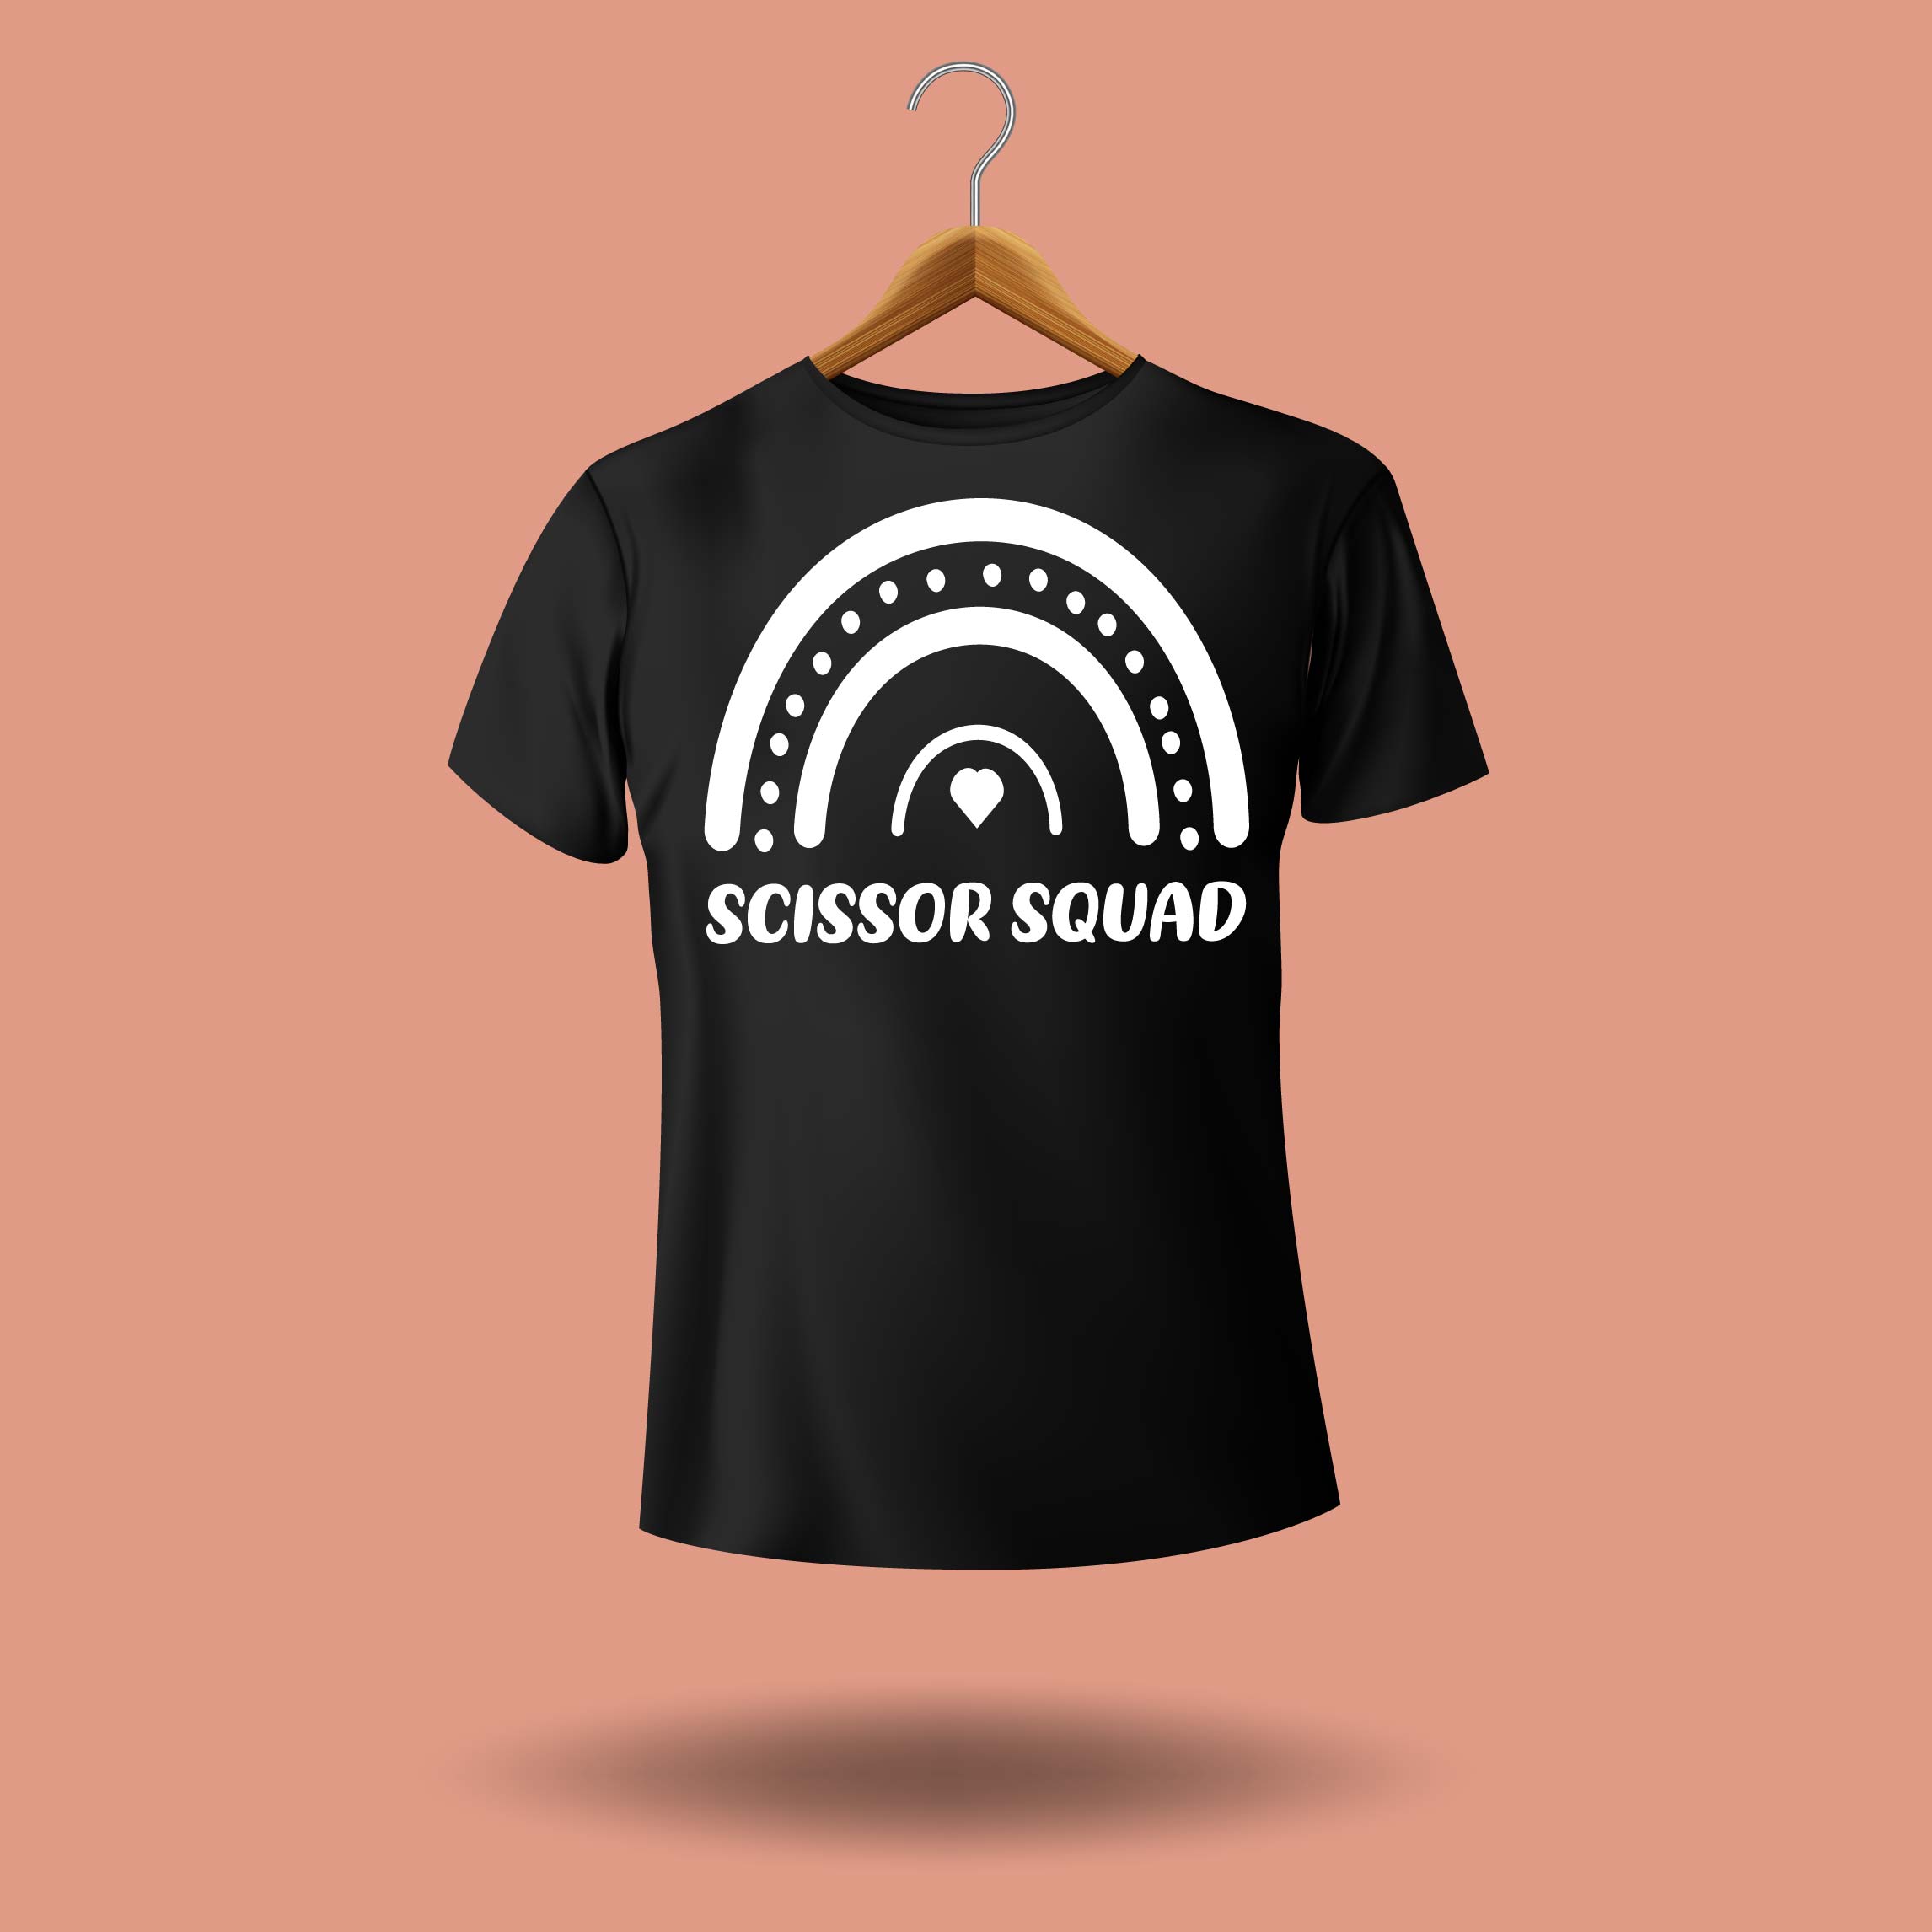 Black t - shirt that says scissors squad on it.